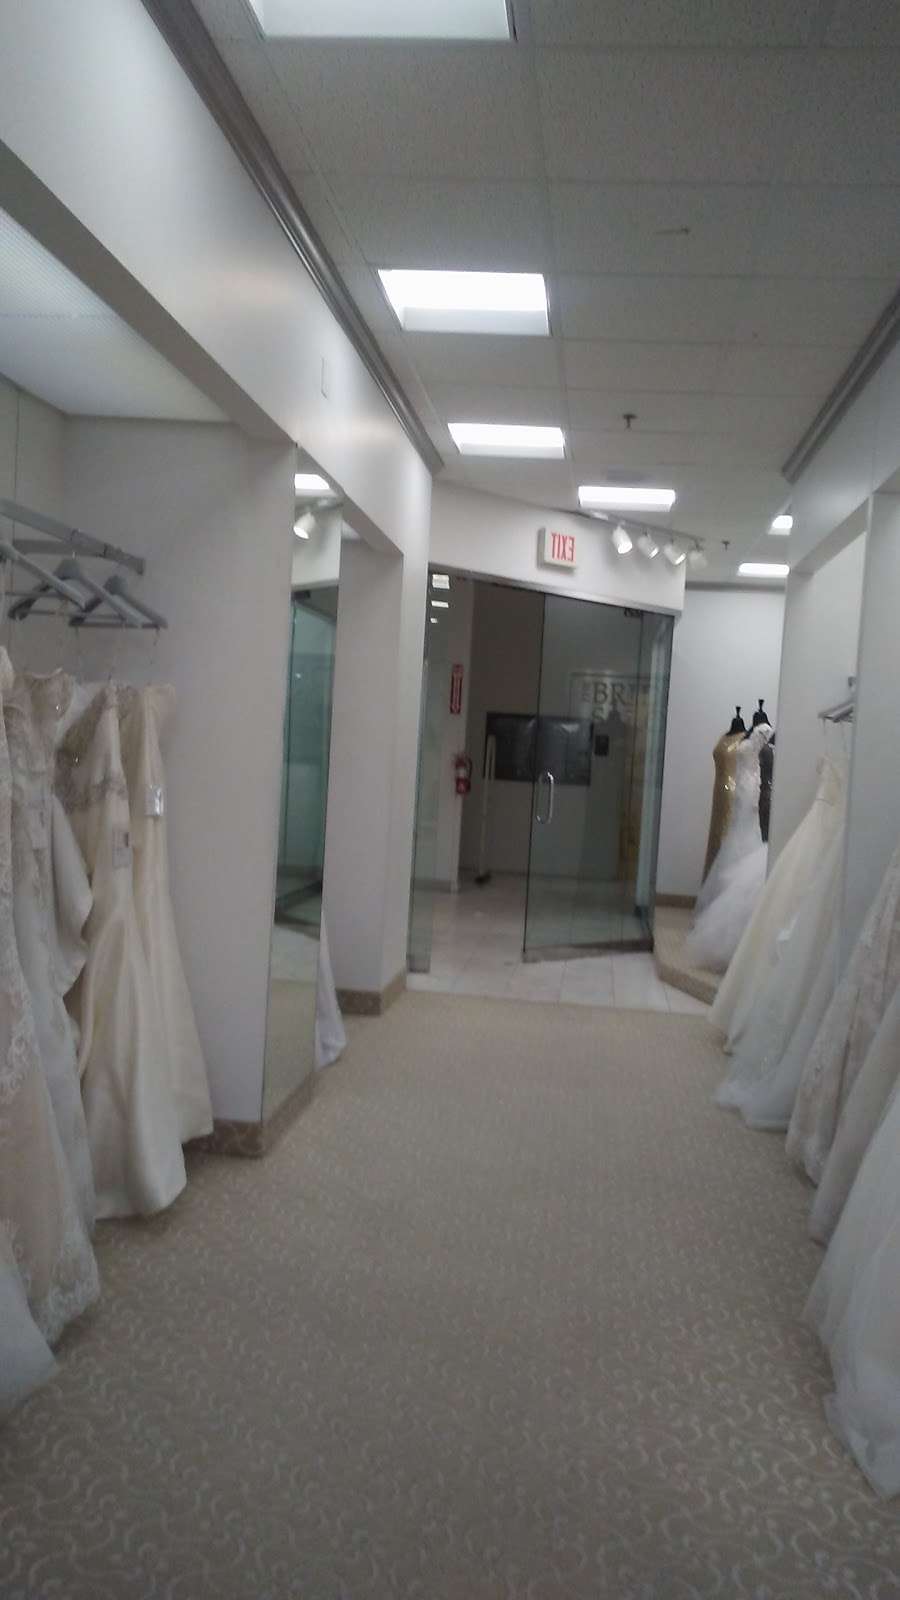 Macys Bridal Salon by Demetrios | 1100 Northern Blvd, Manhasset, NY 11030 | Phone: (516) 869-0391